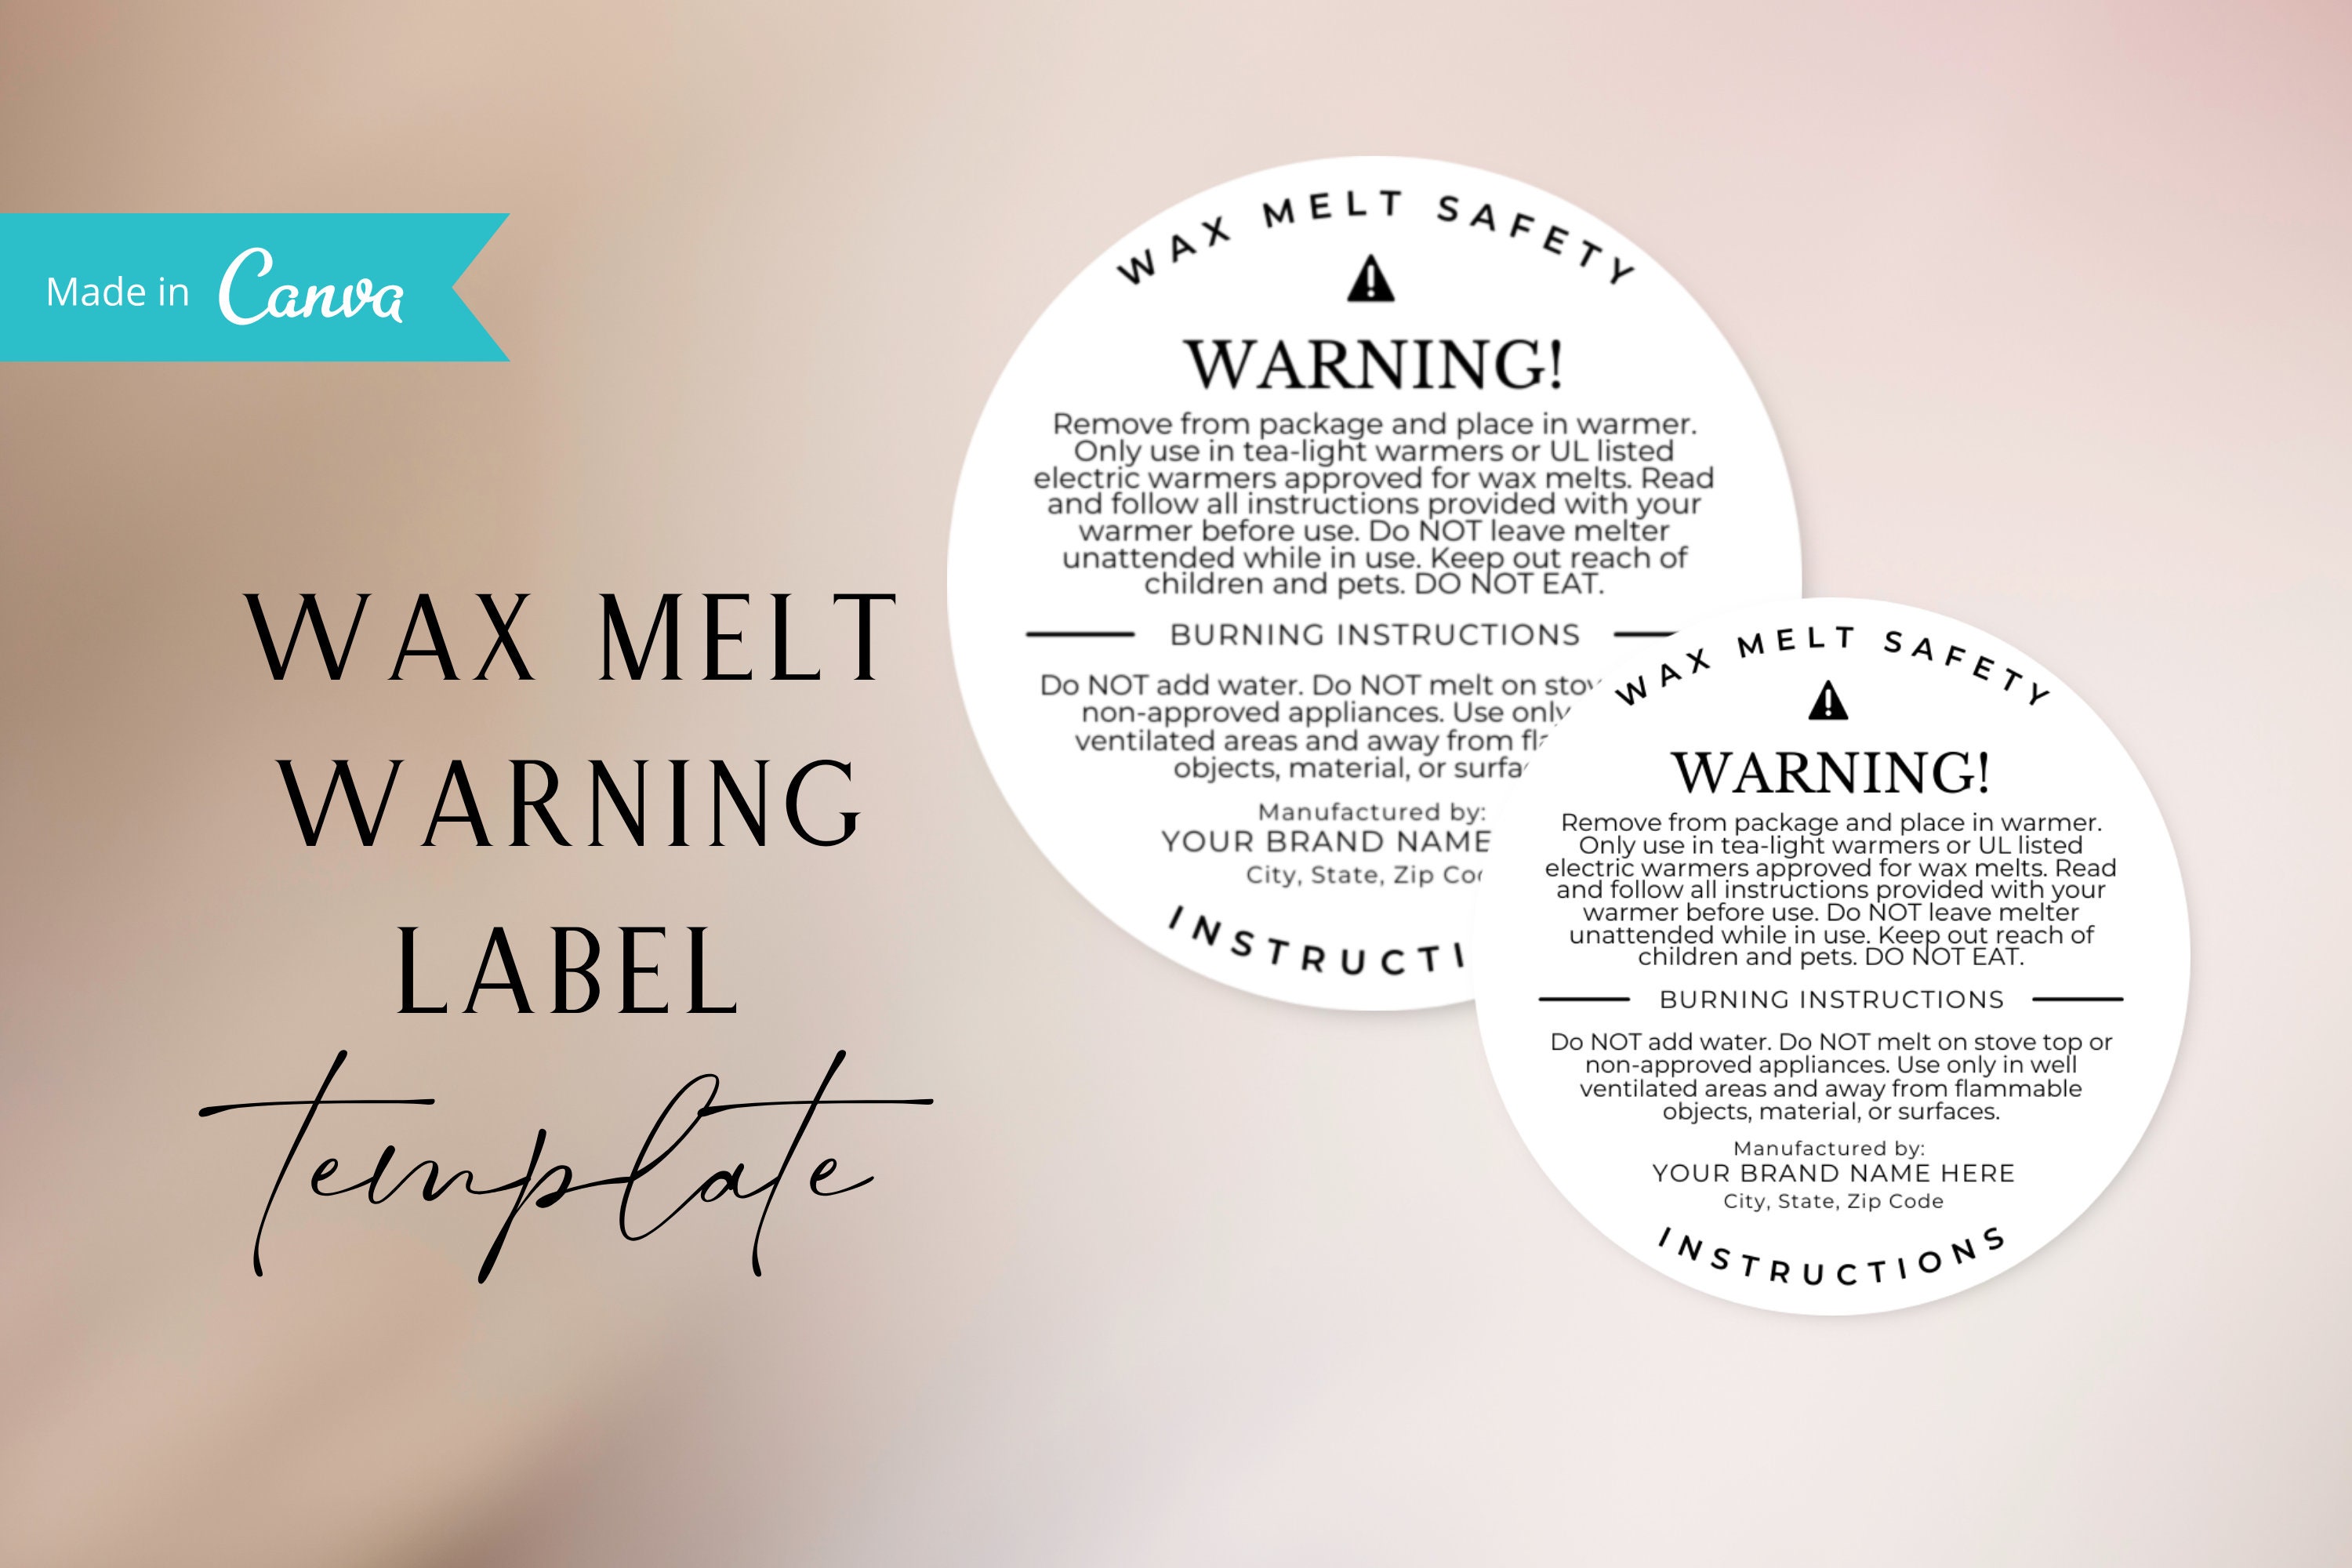 White Wax Melt Warning Label Template 02